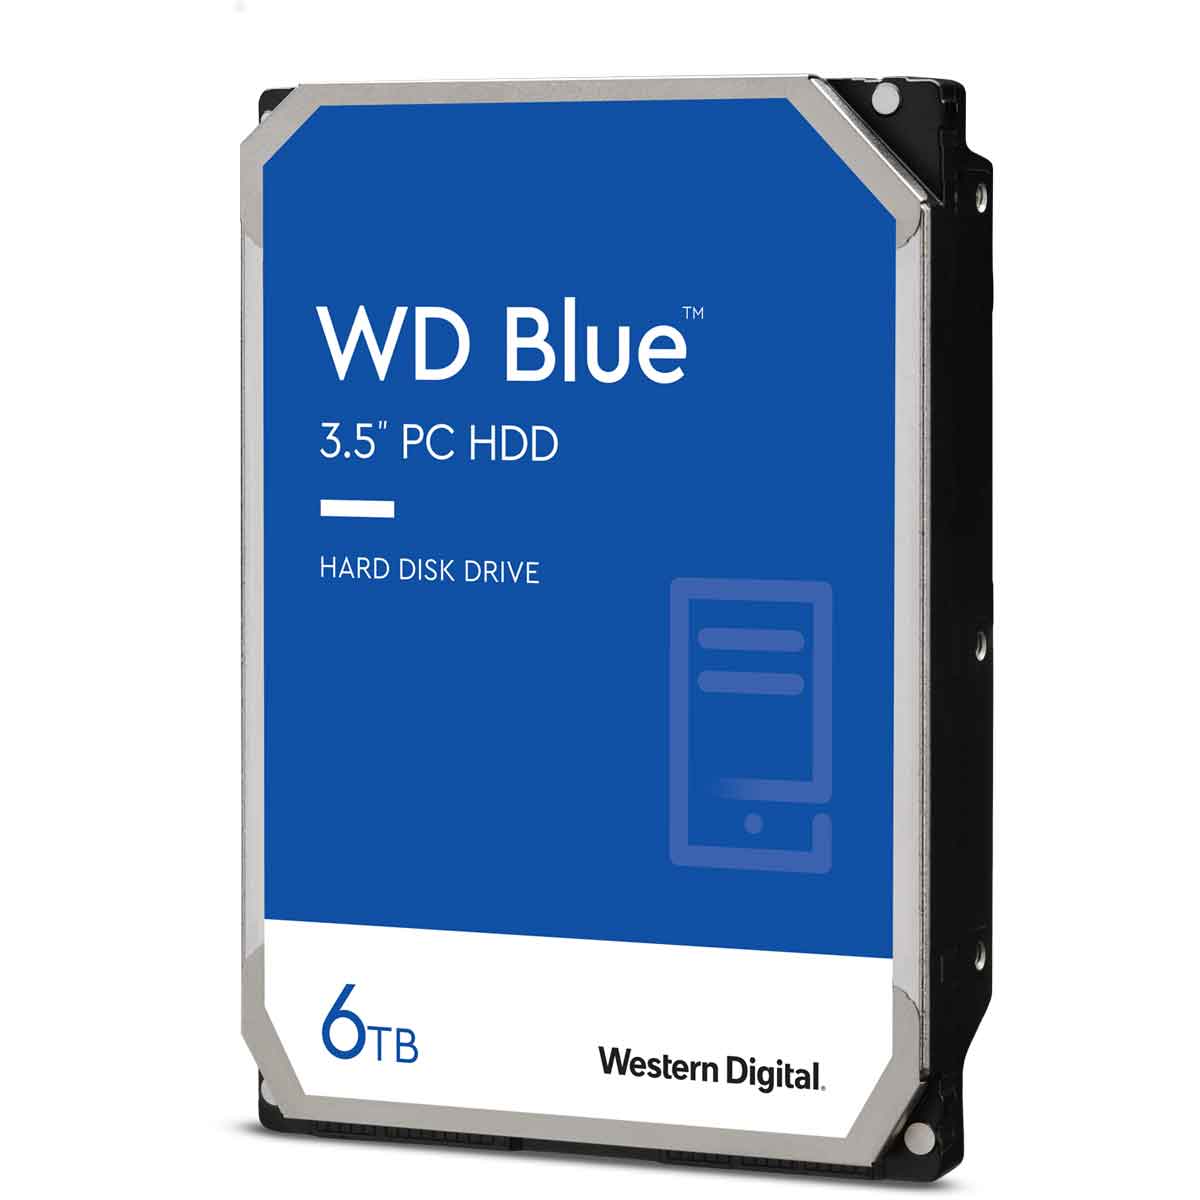 Western Digital ウエスタンデジタル 3.5インチ内蔵ハードディスク WD Blue 6TB 簡易パッケージ WD60EZAX